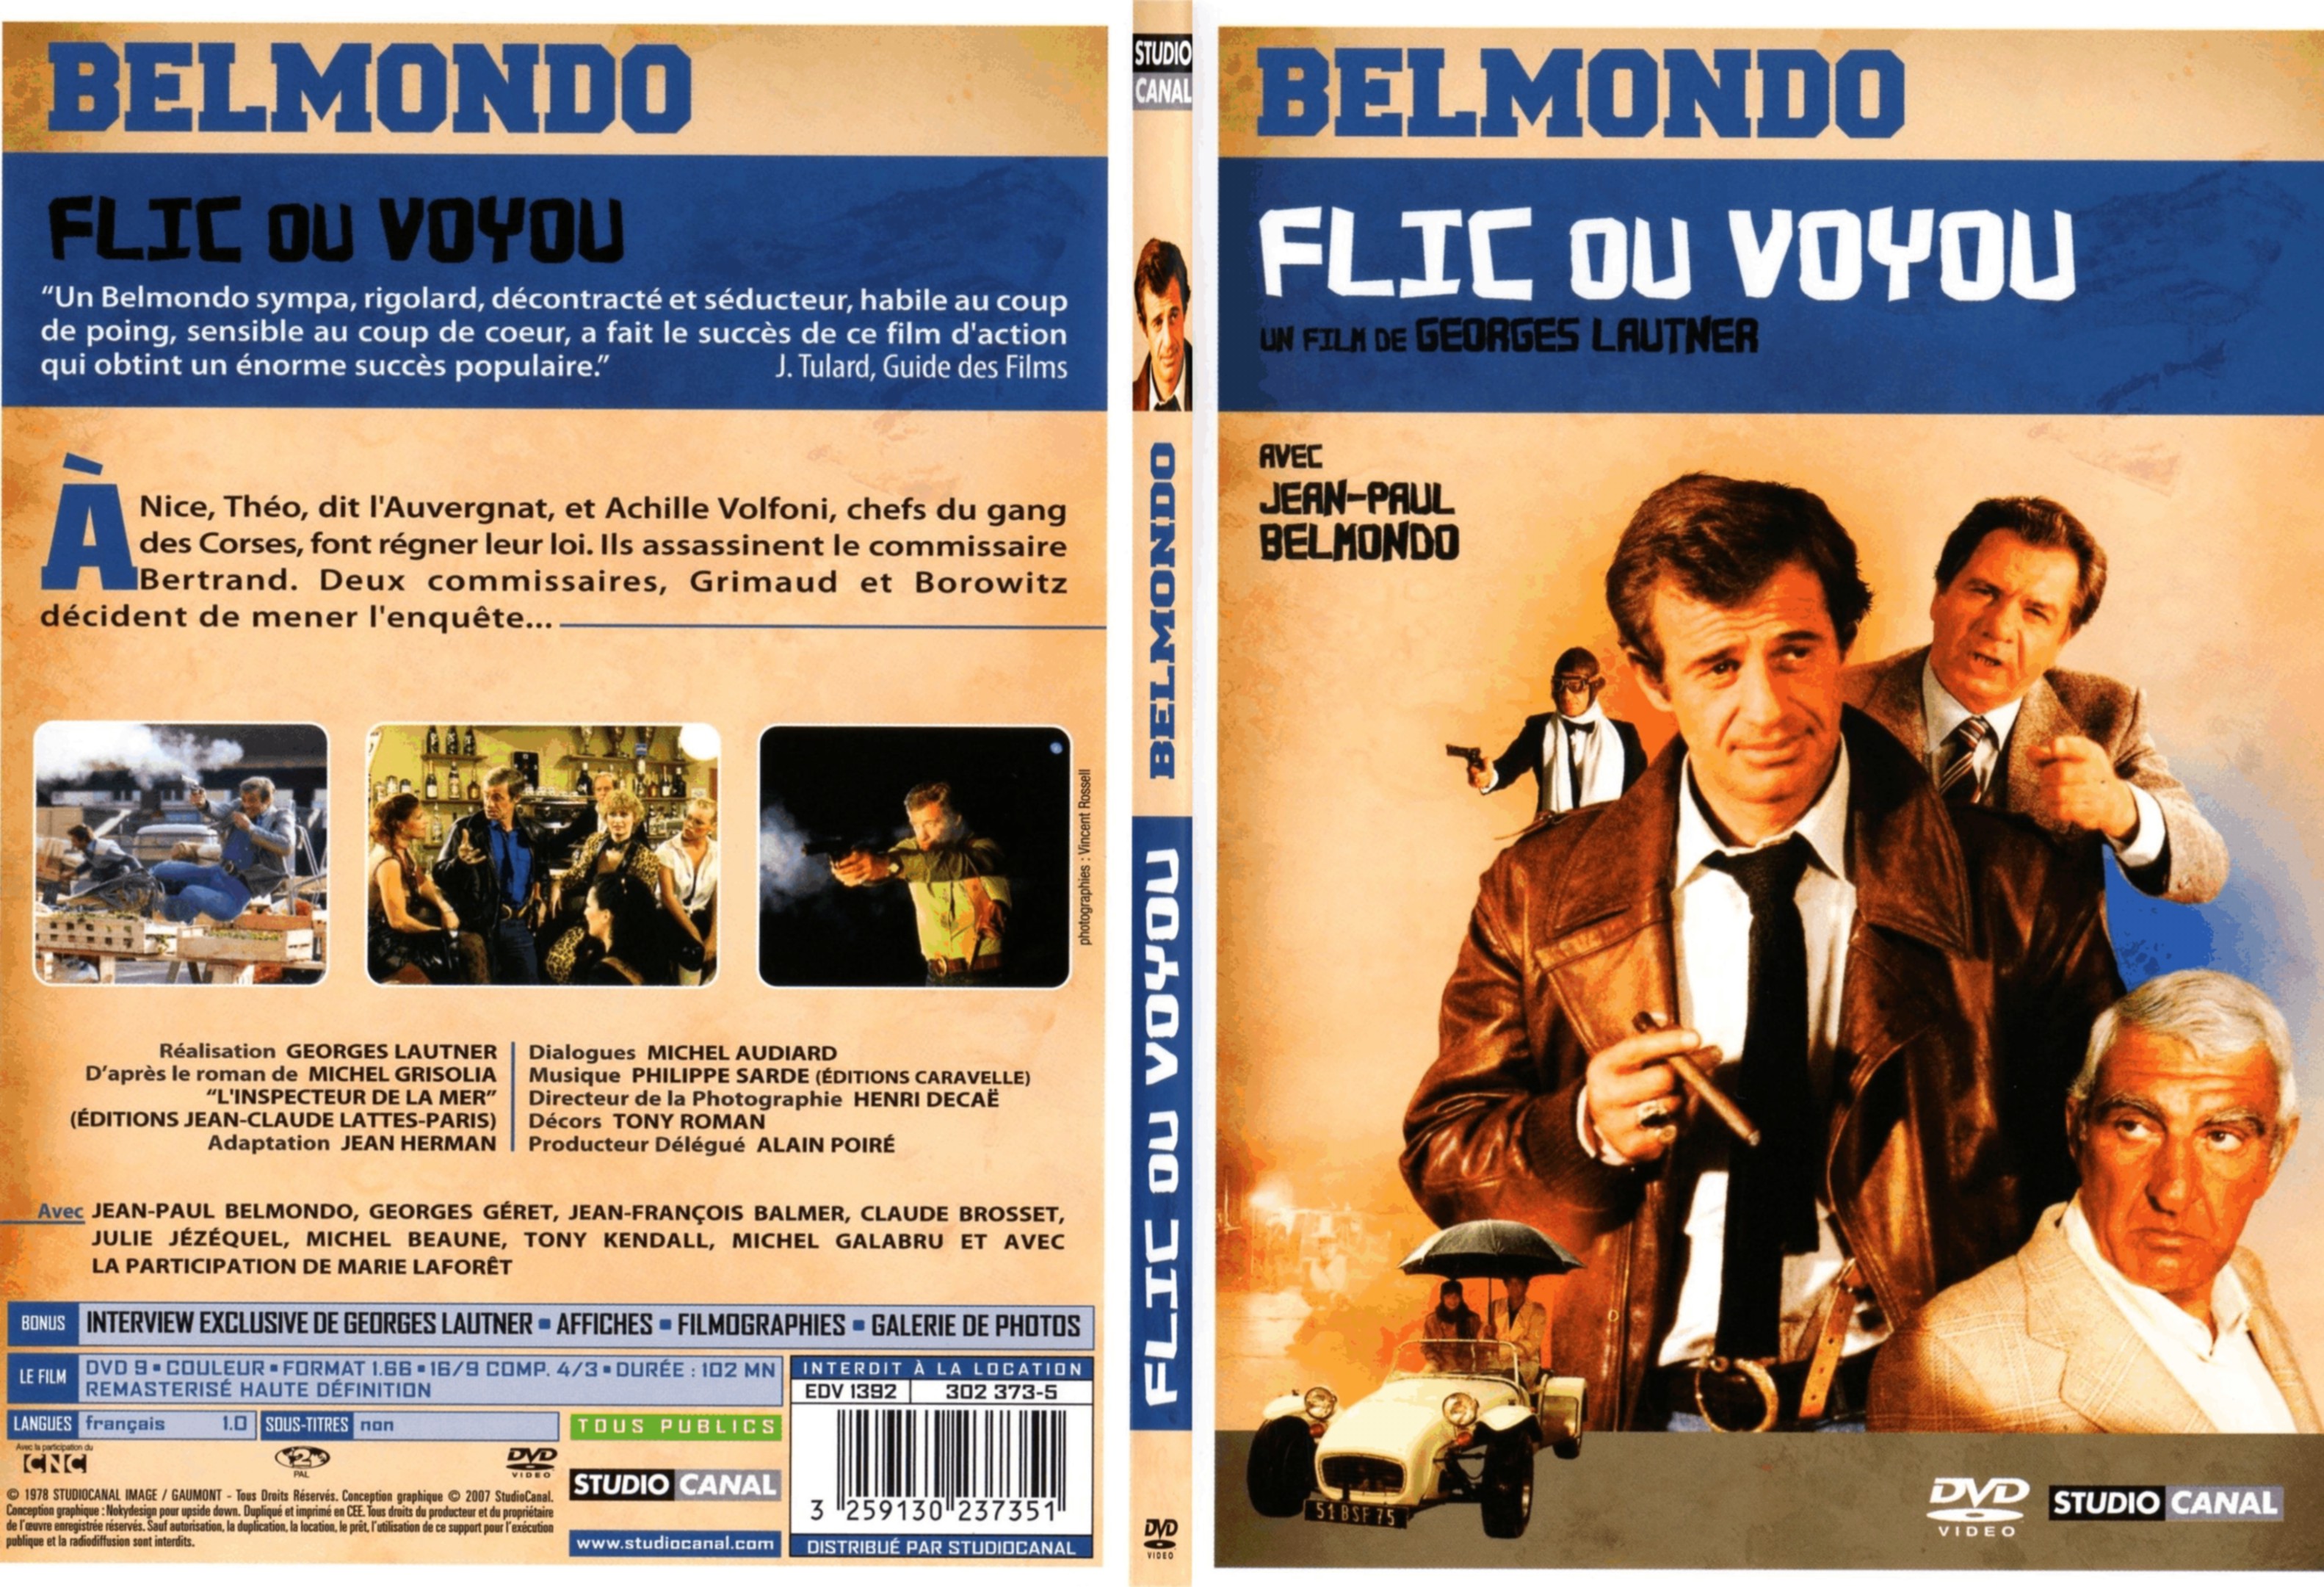 Jaquette DVD Flic ou voyou - SLIM